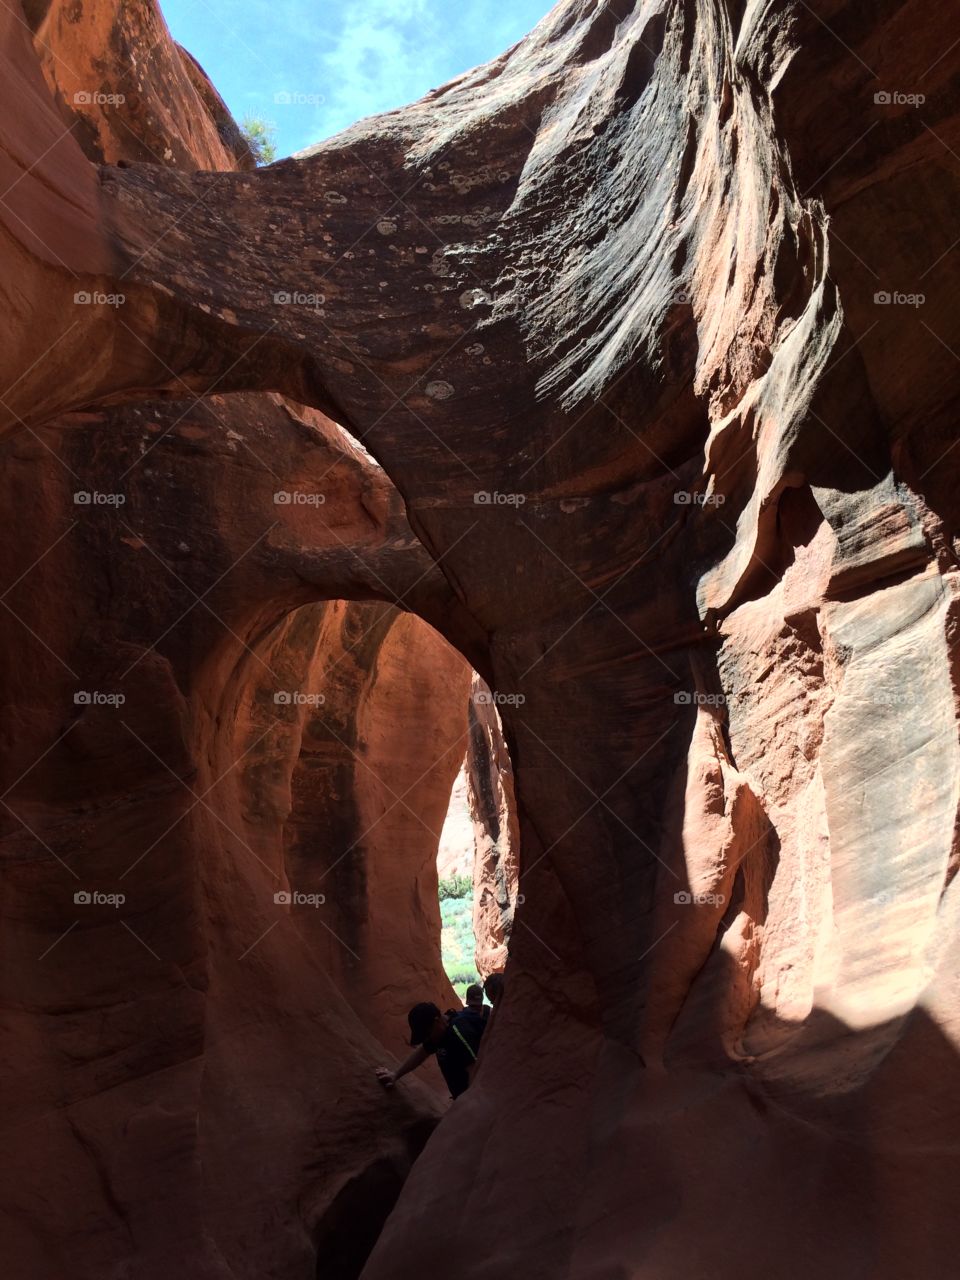 Desert rock cave